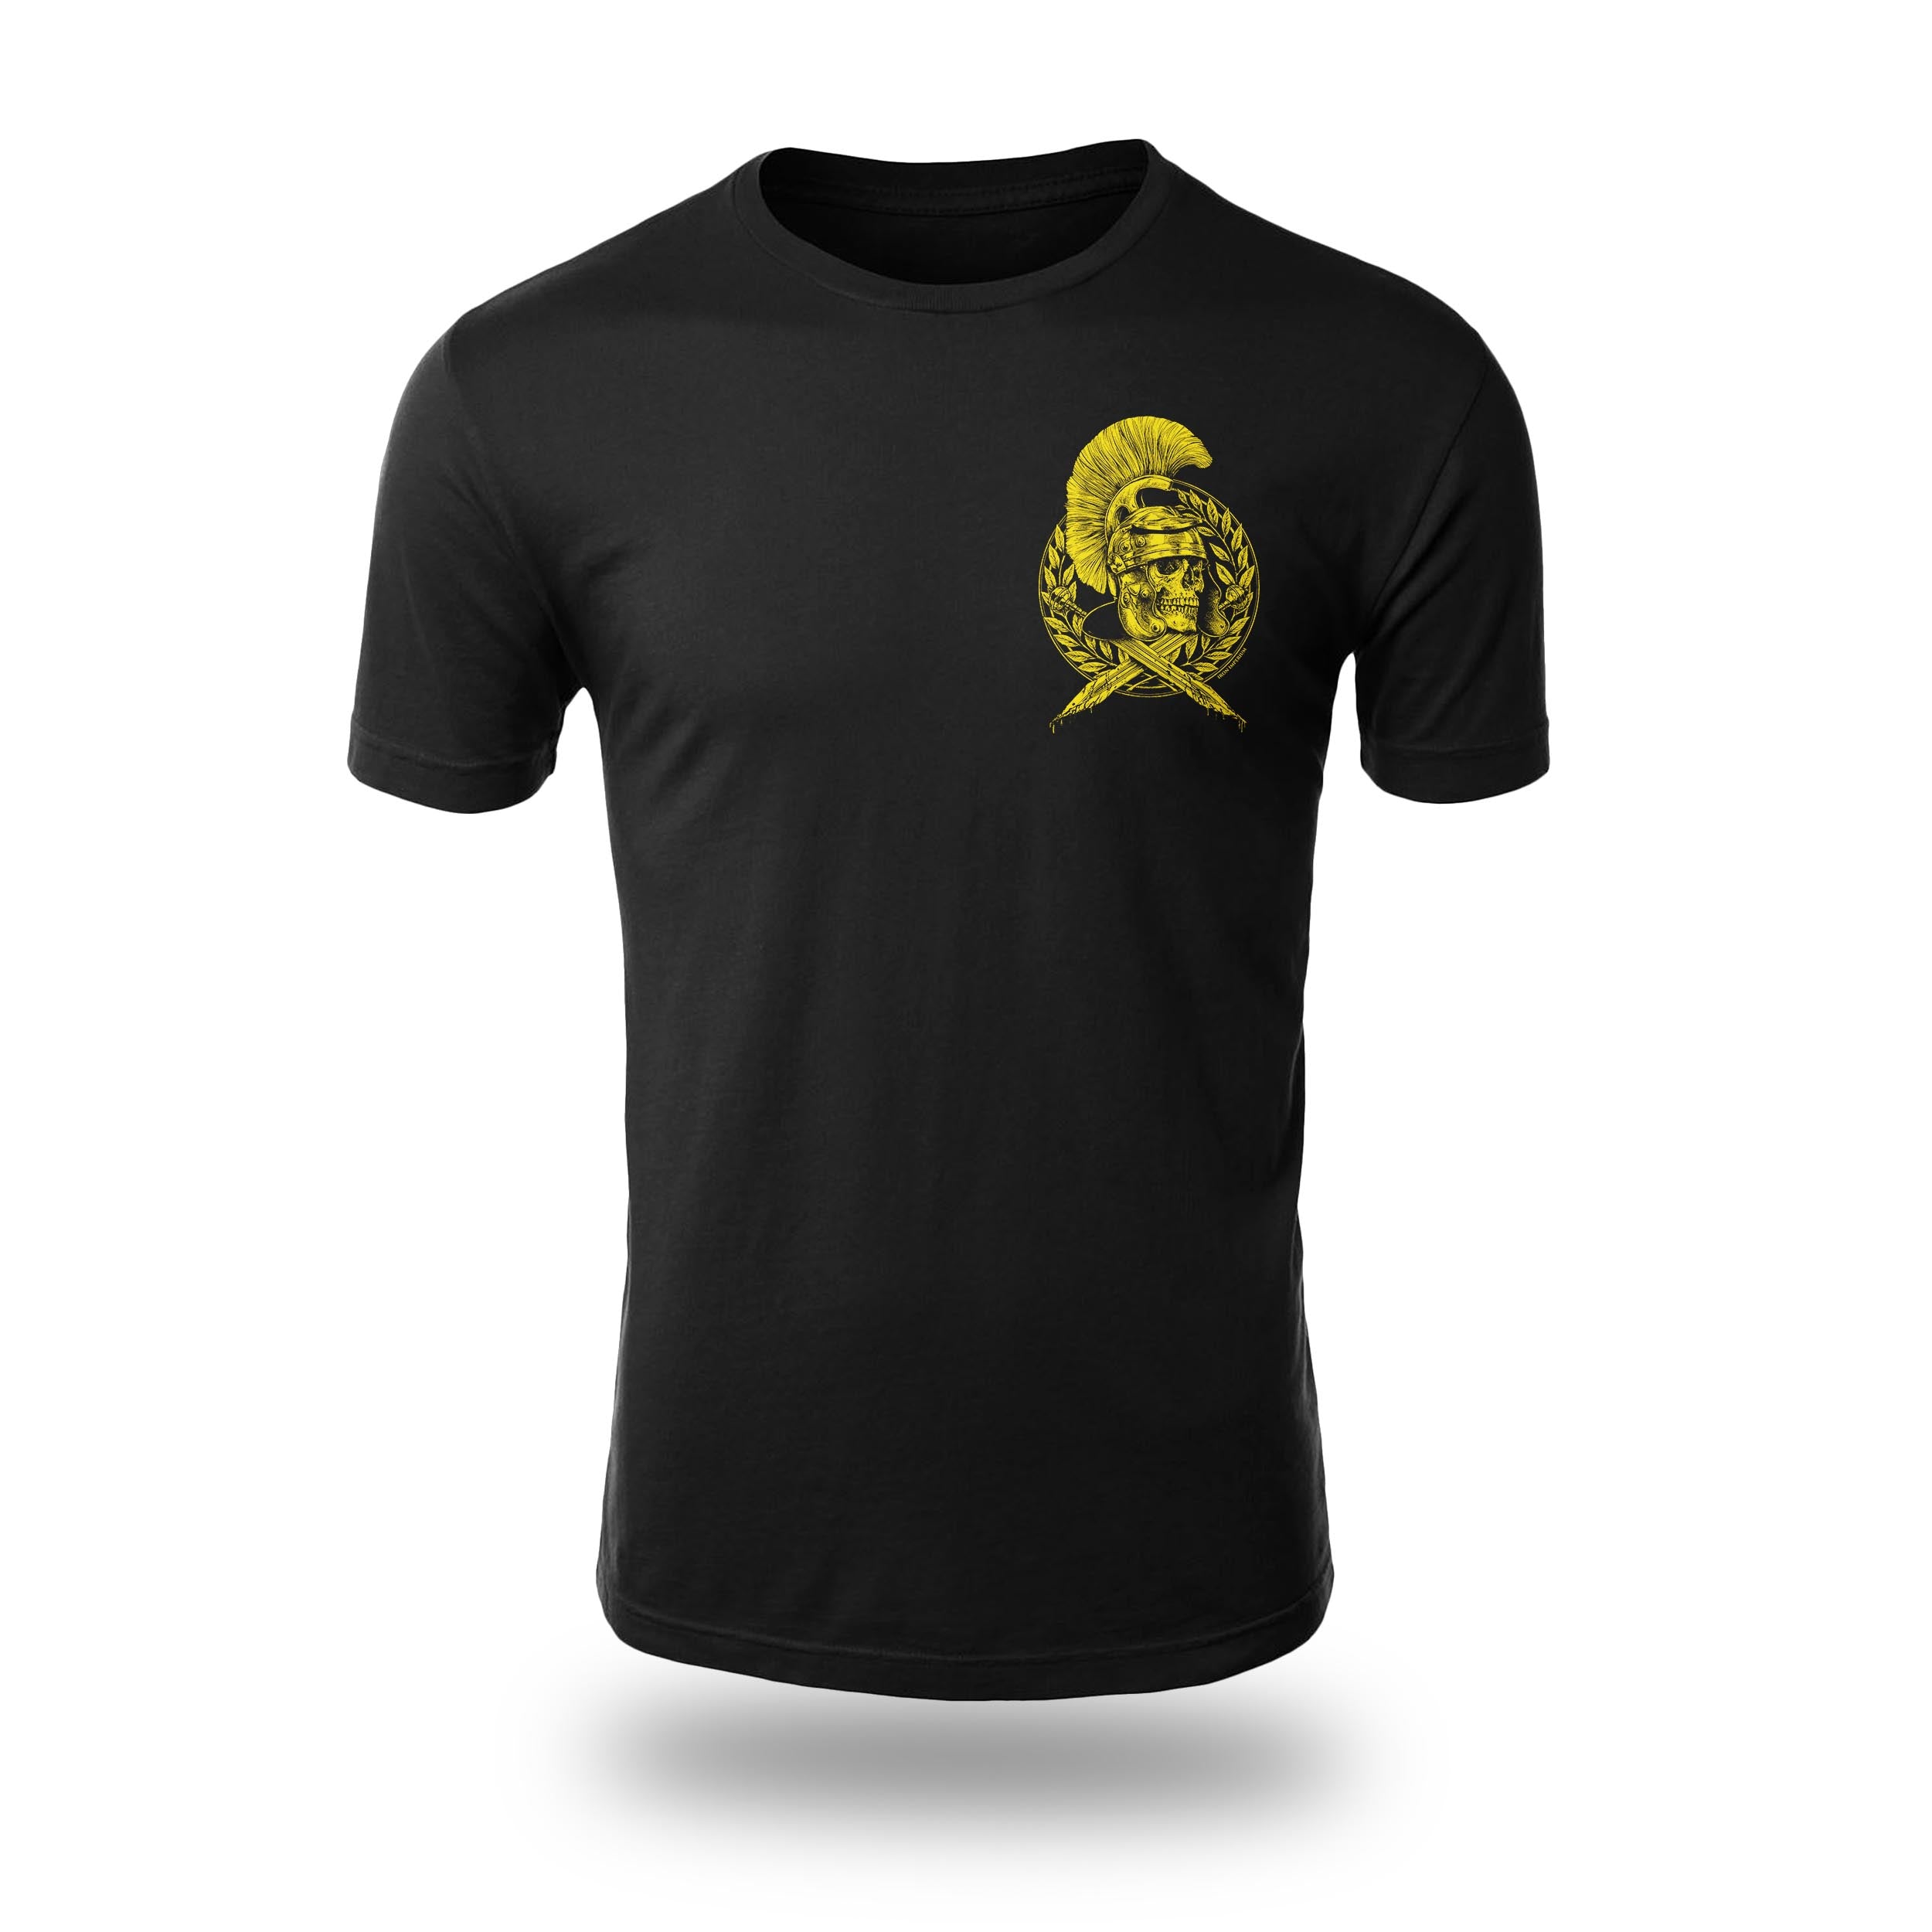 Immortal Praetorian Veni Vidi Vici black t-shirt left chest yellow design